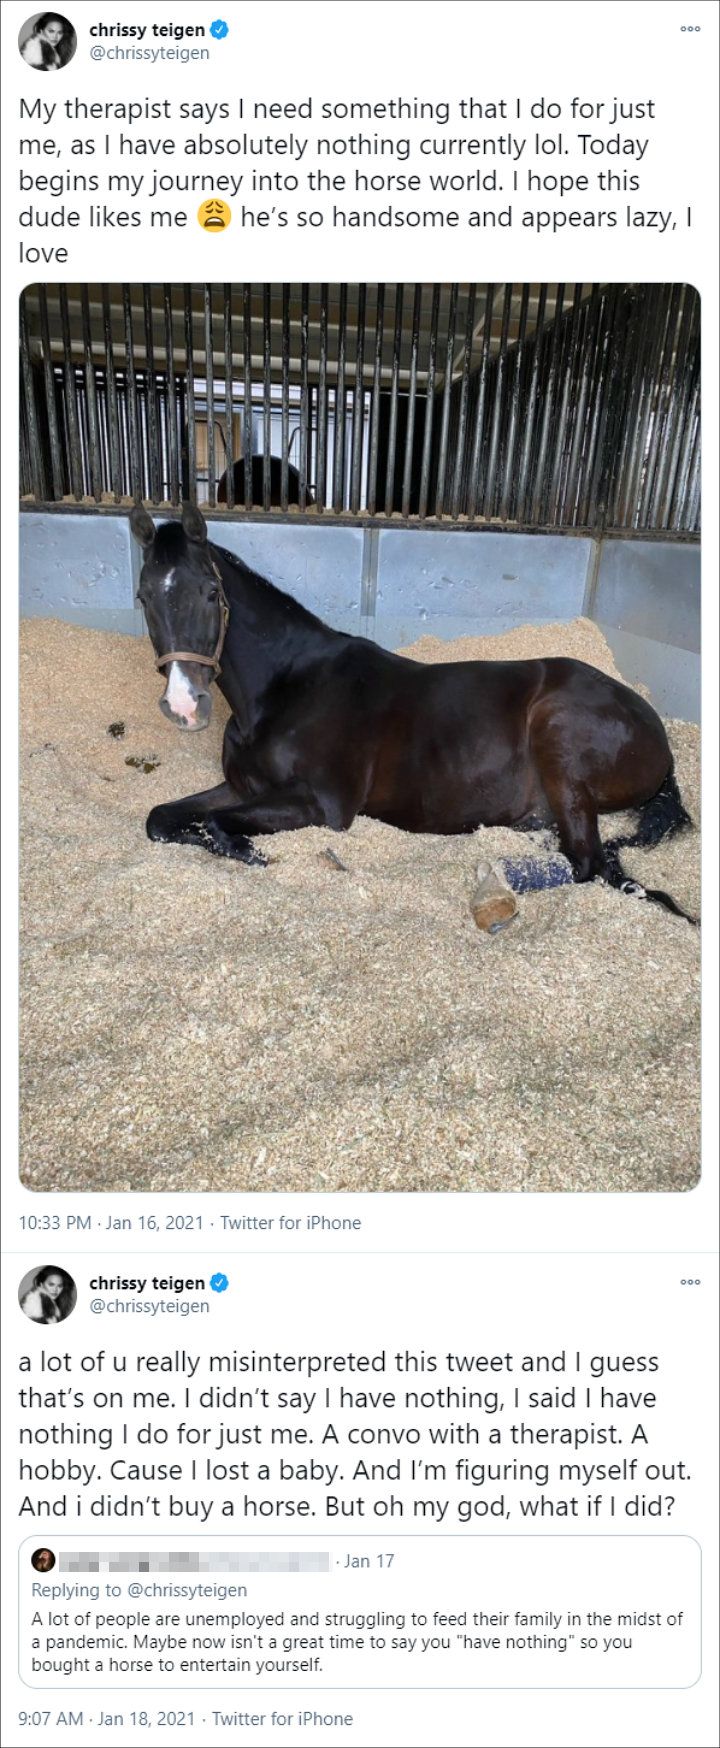 Chrissy Teigen clarified her horse tweet